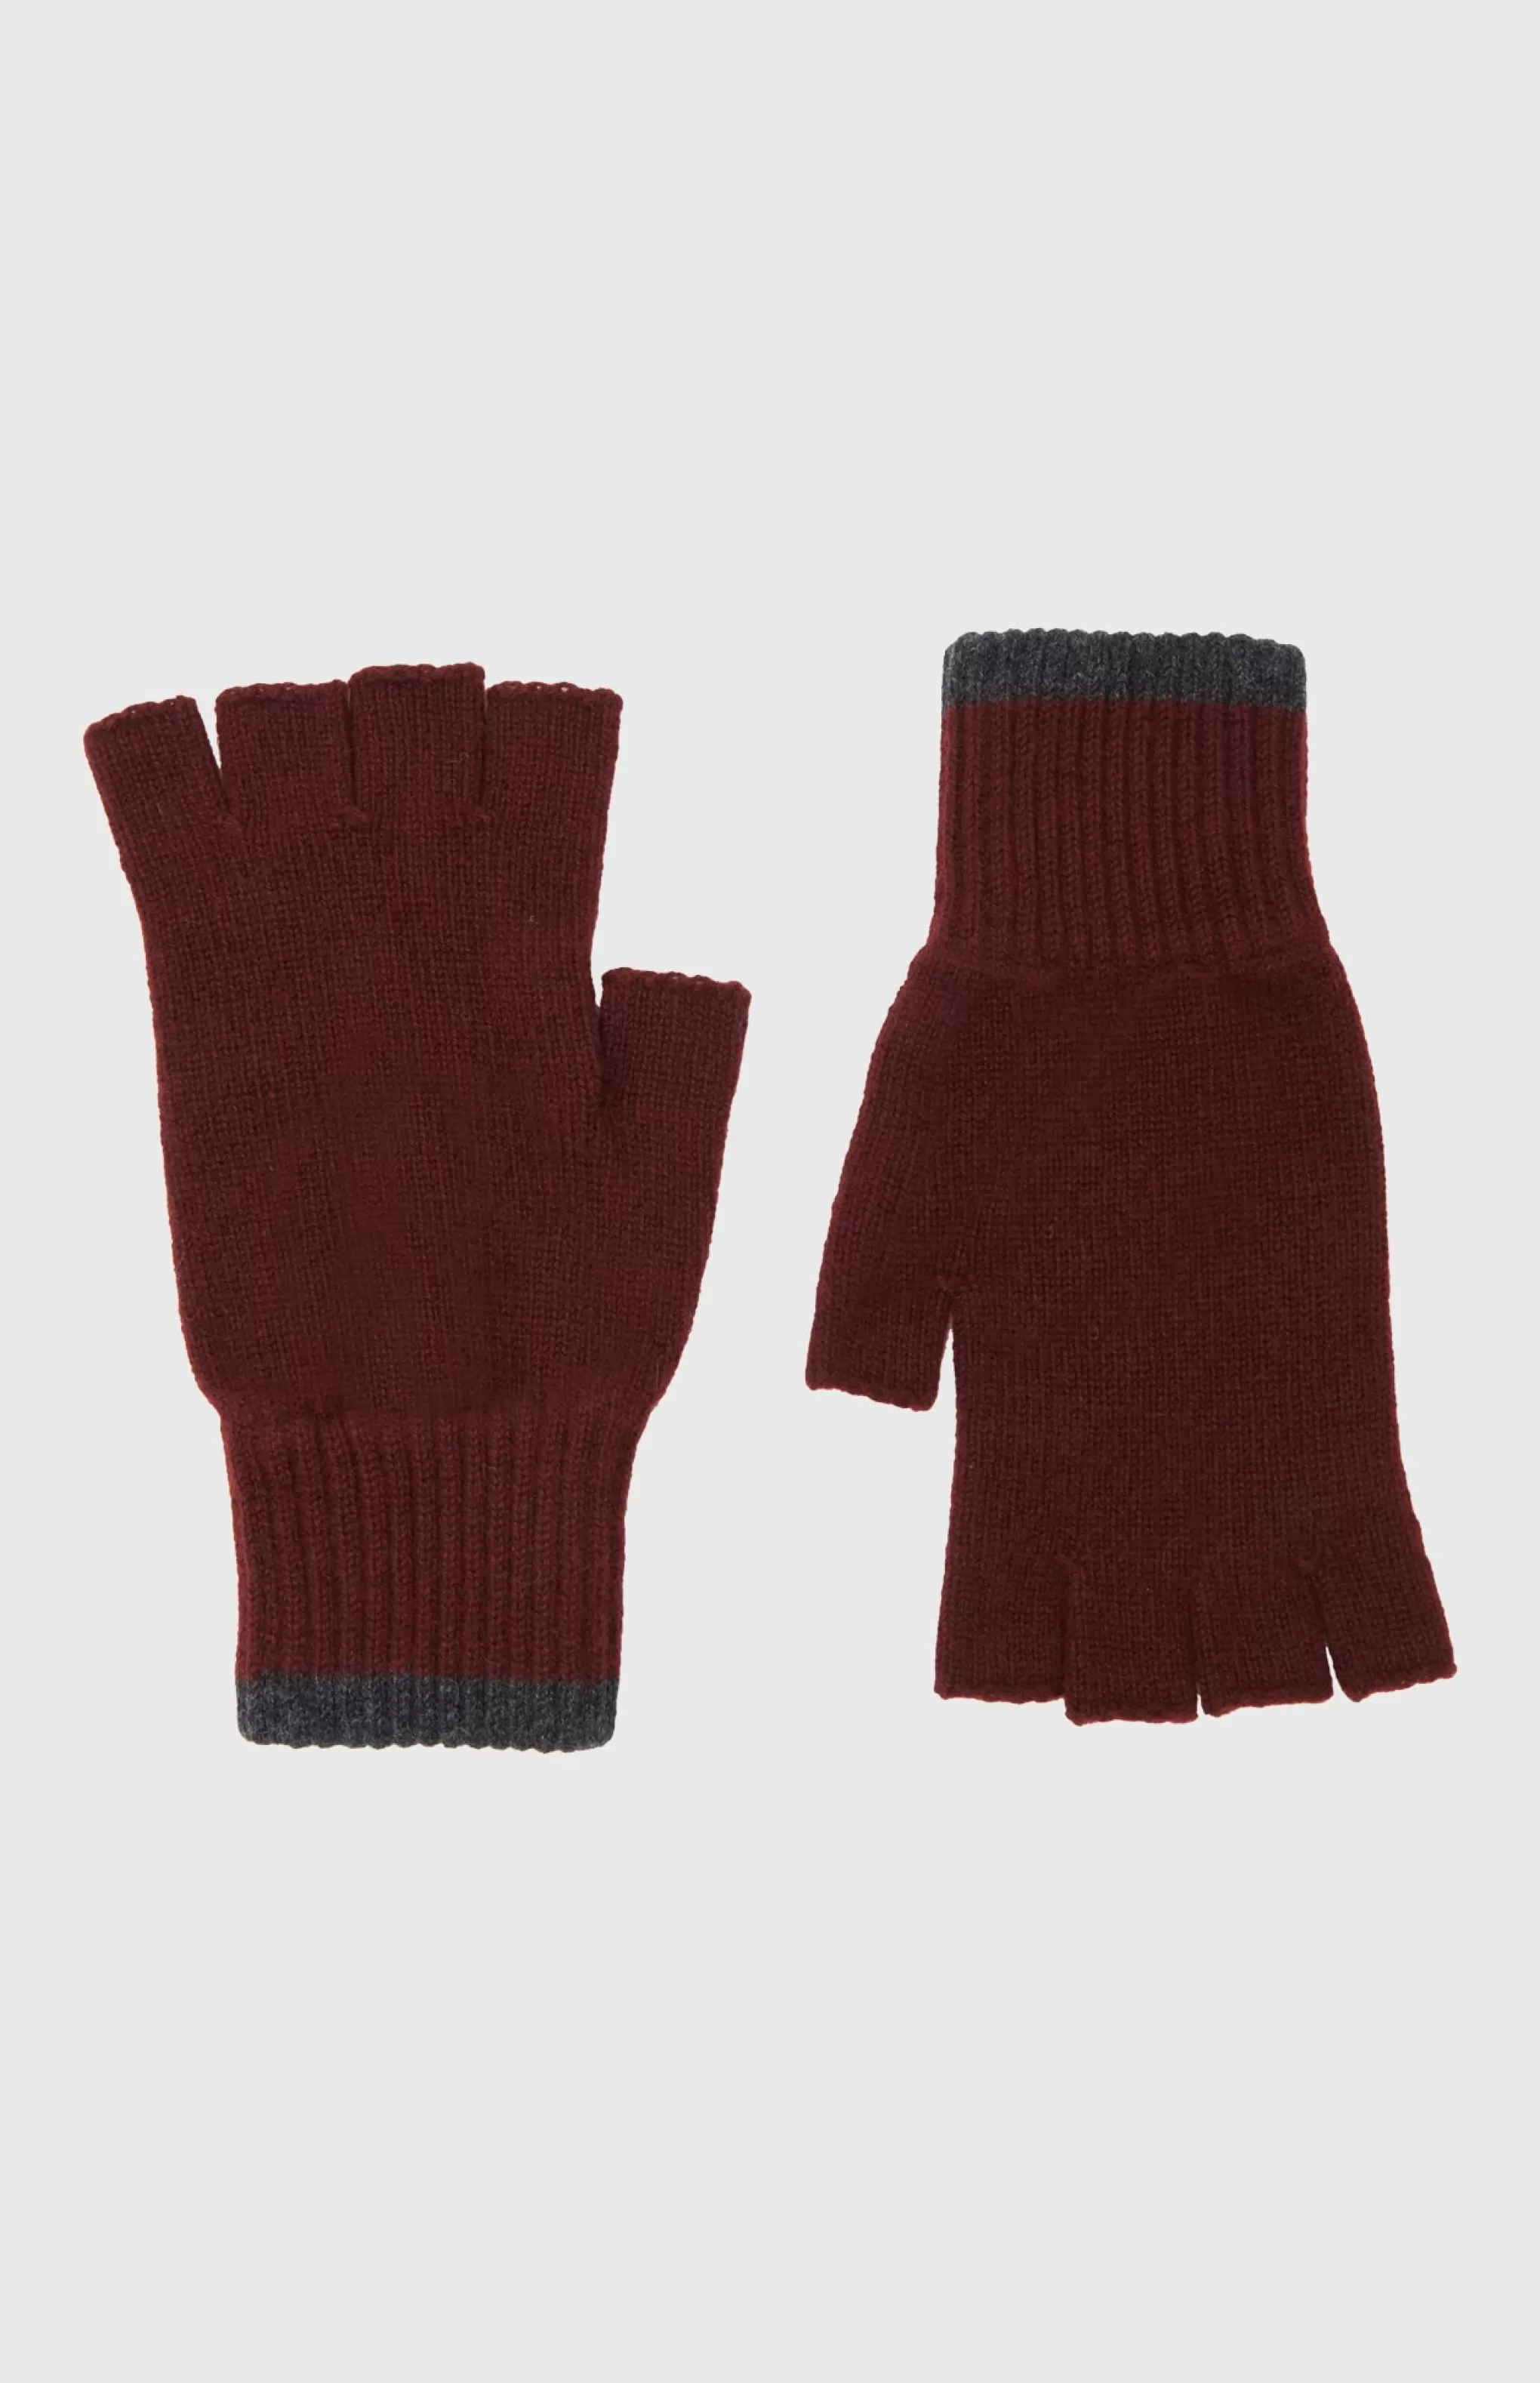 Hot Cashmere Fingerless Gloves Contrast Ribs In Dark Claret Men/Women Gifts For Women